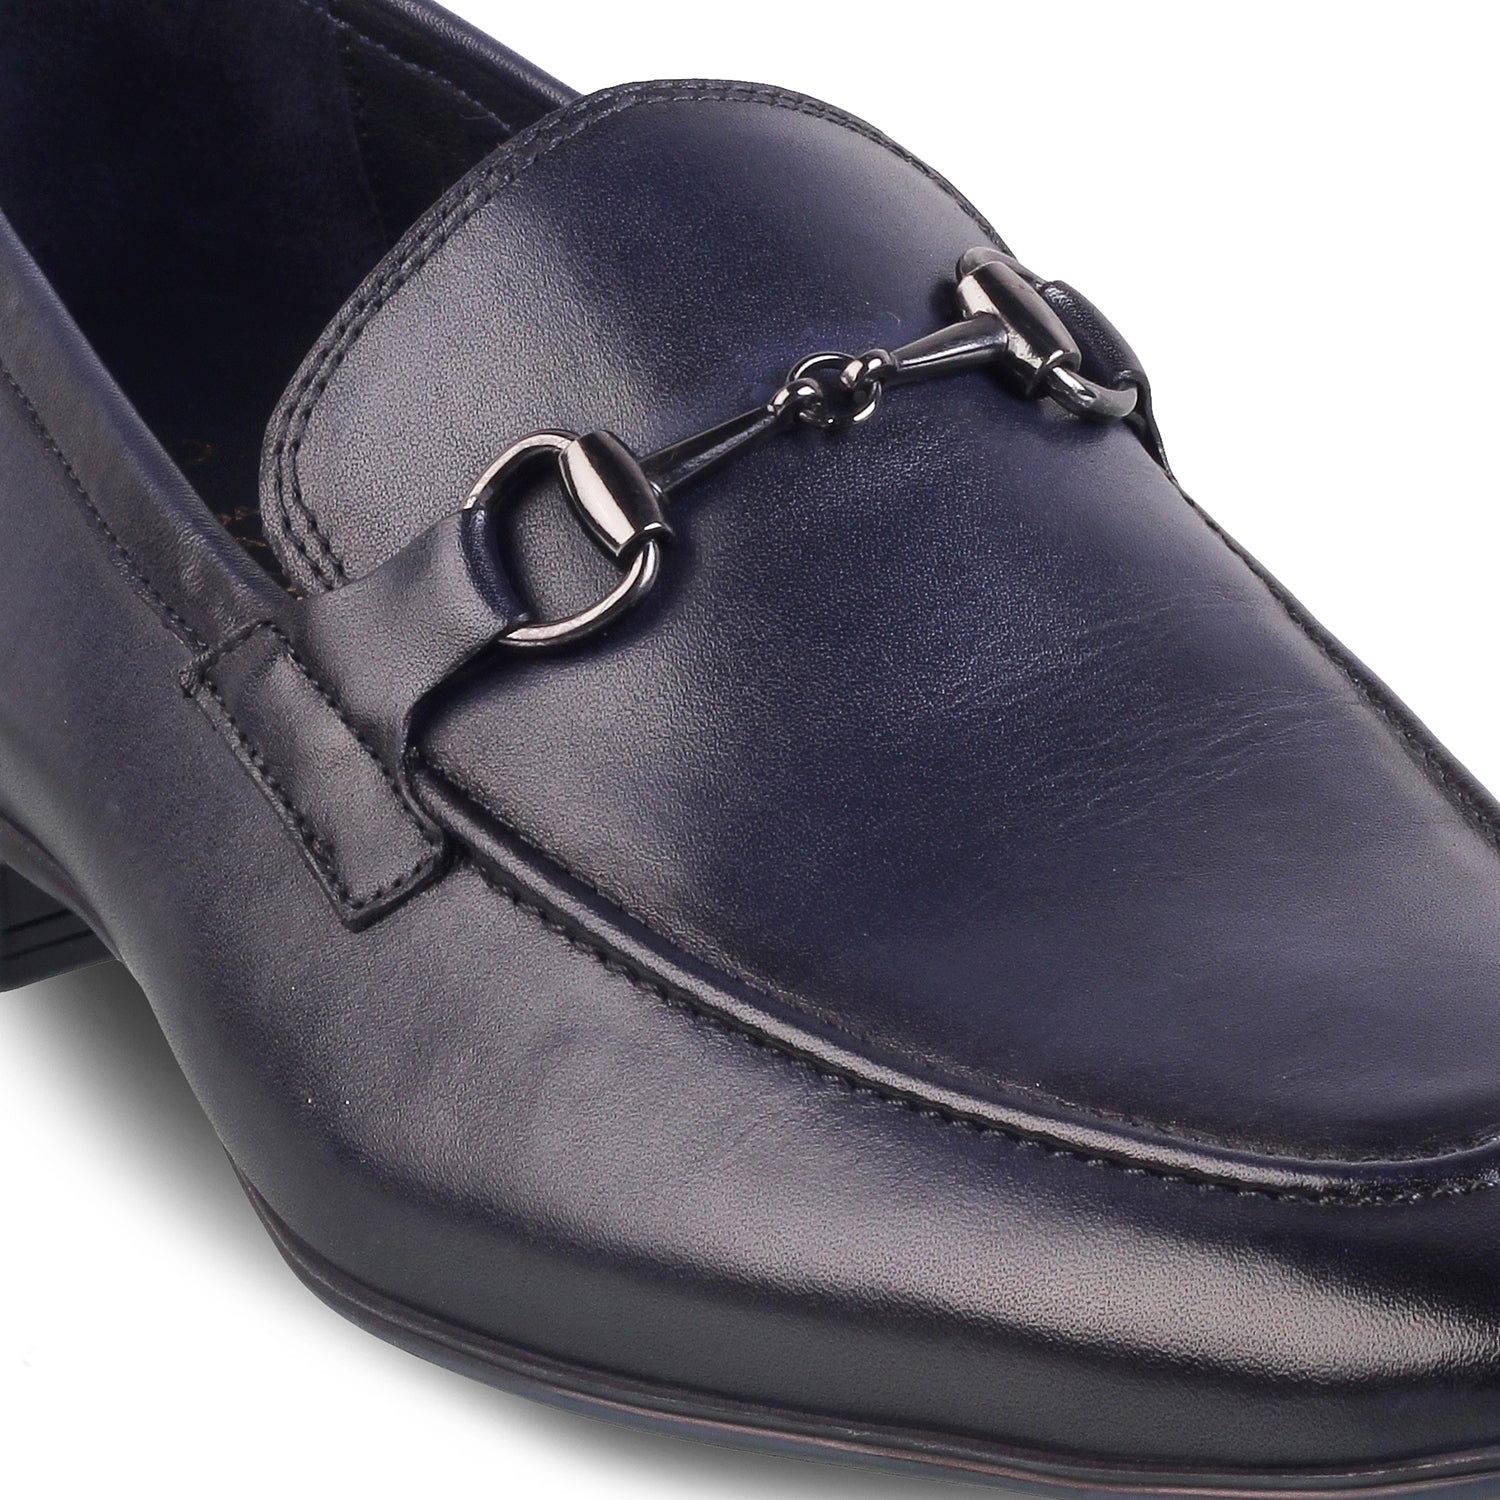 Niko Blue Men's Horse-Bit Leather Loafers Online at Tresmode.com